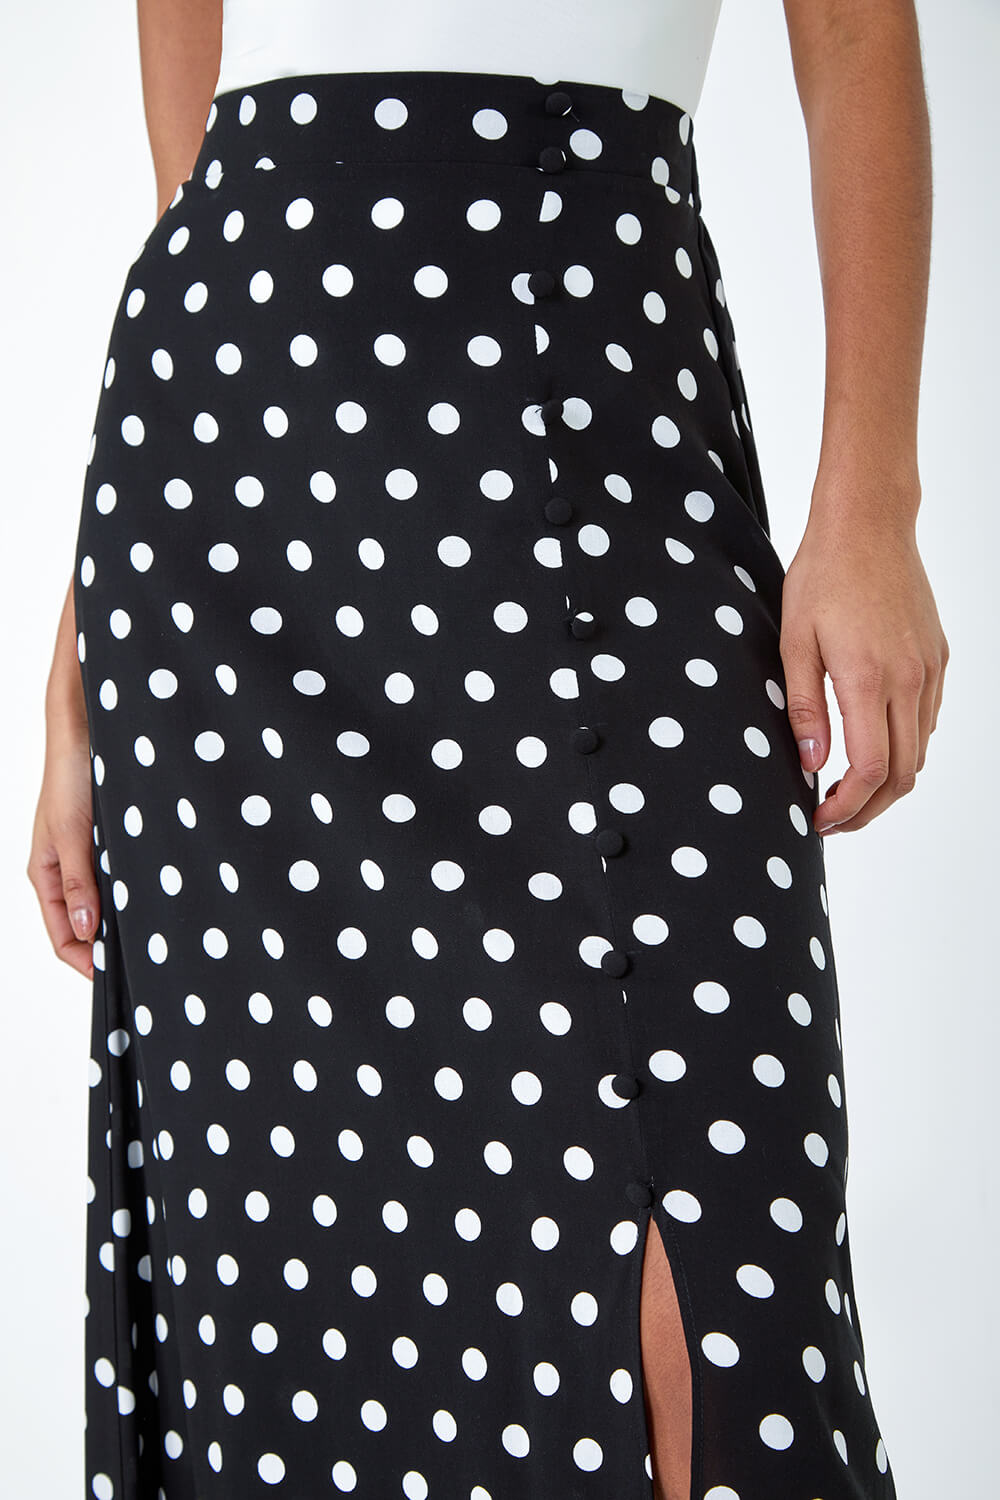 Black Polka Dot Button Detail Midi Skirt, Image 5 of 5